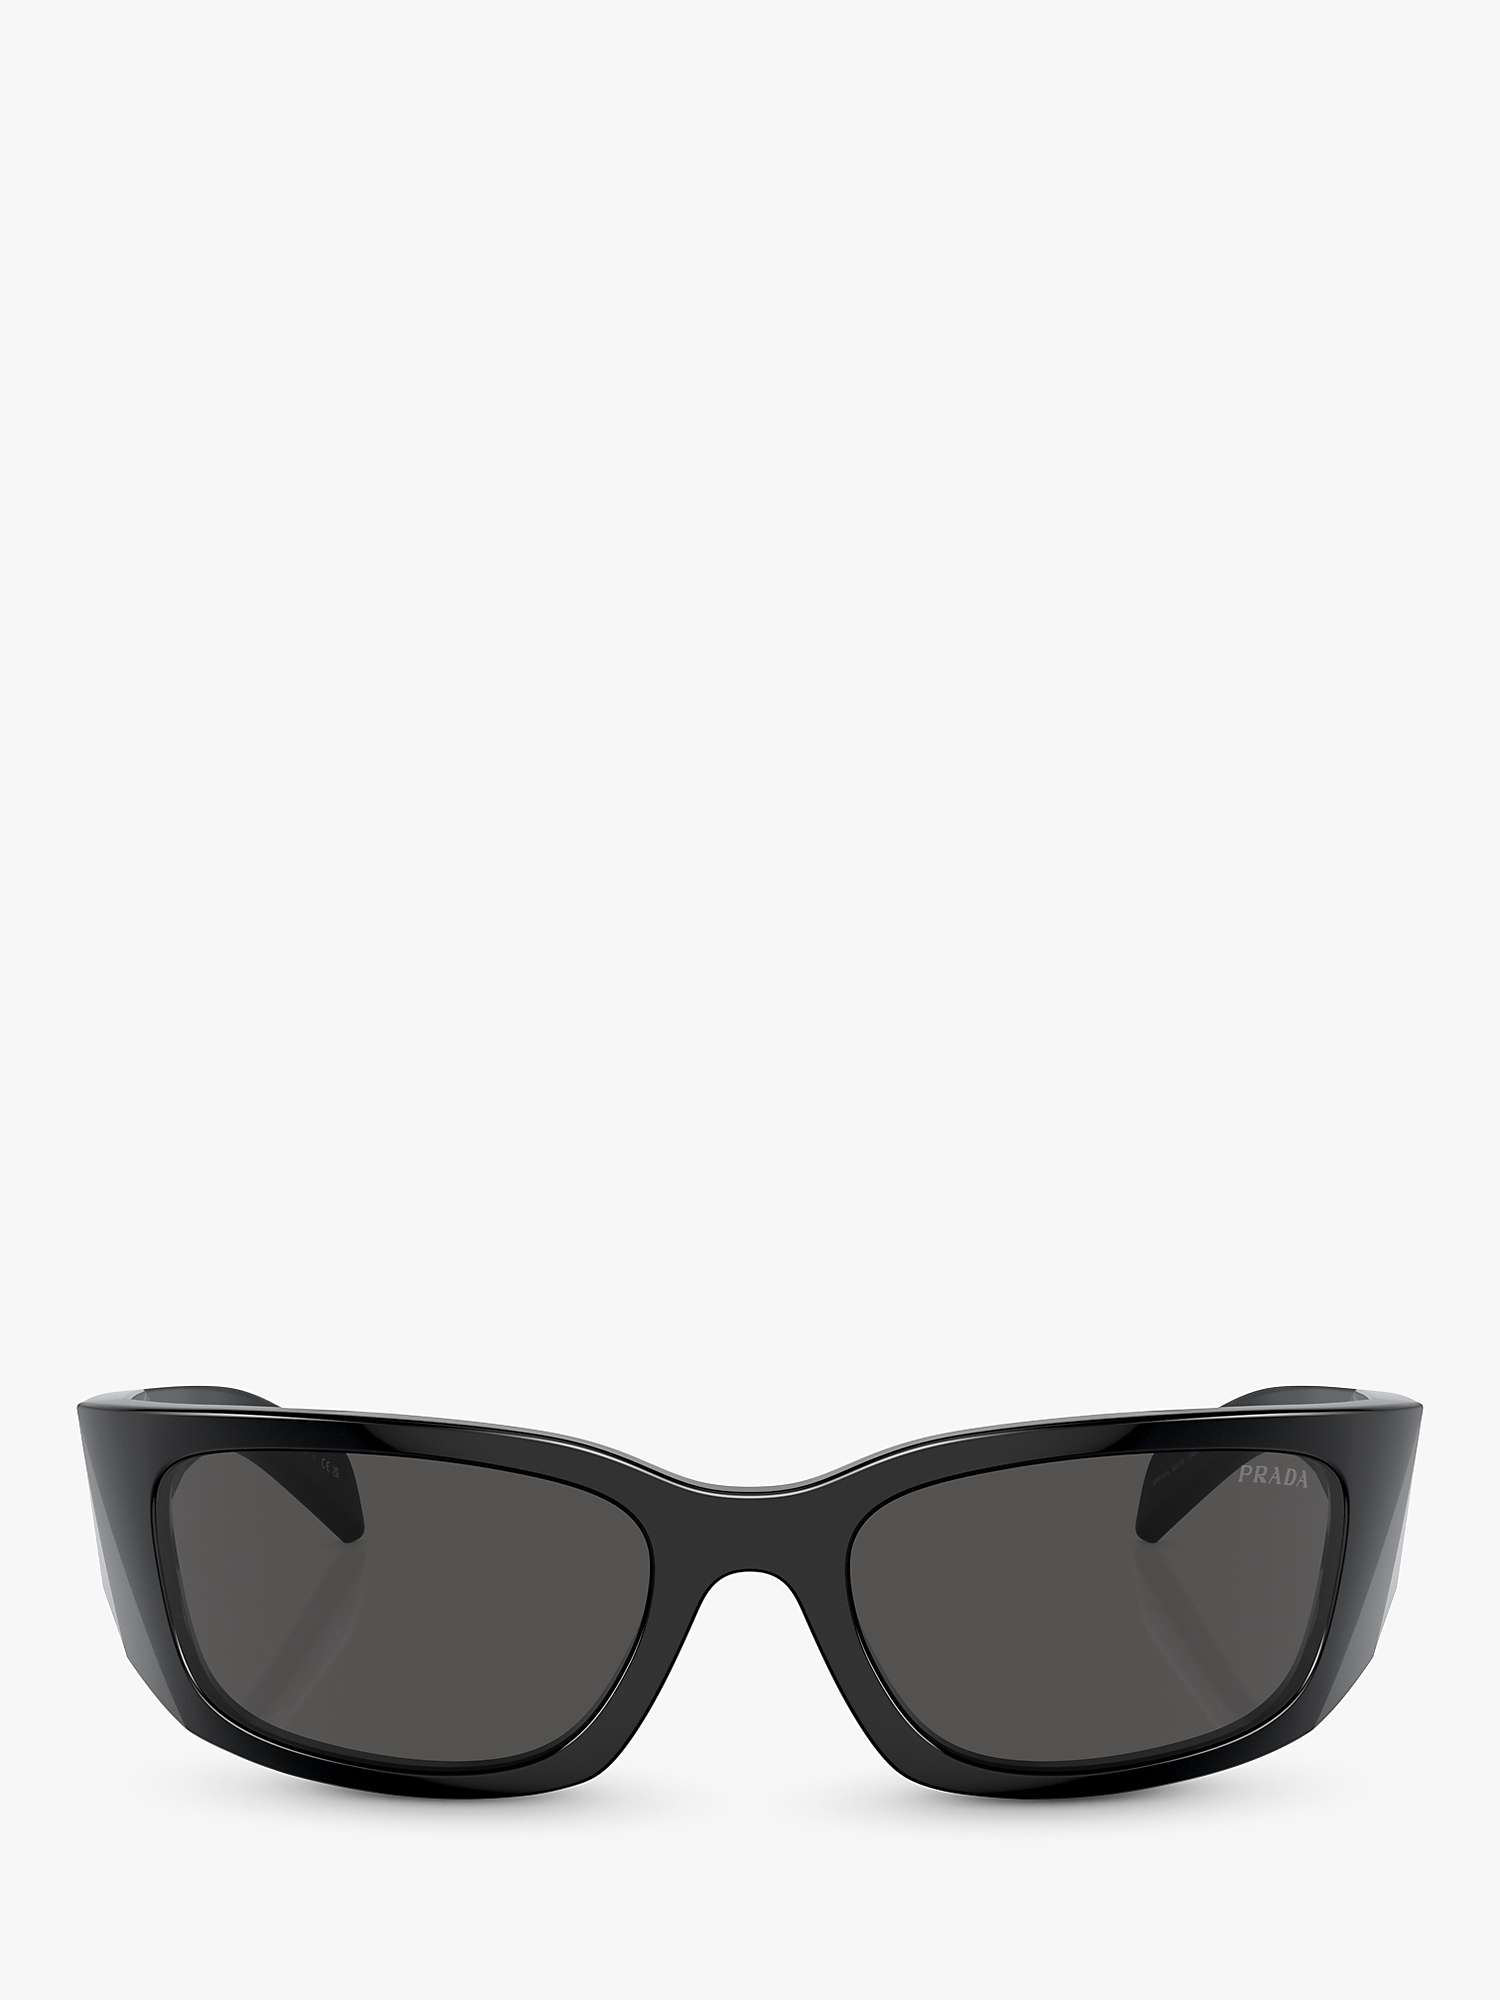 Buy Prada PR A14S Women's Wrap Sunglasses, Black/Grey Online at johnlewis.com